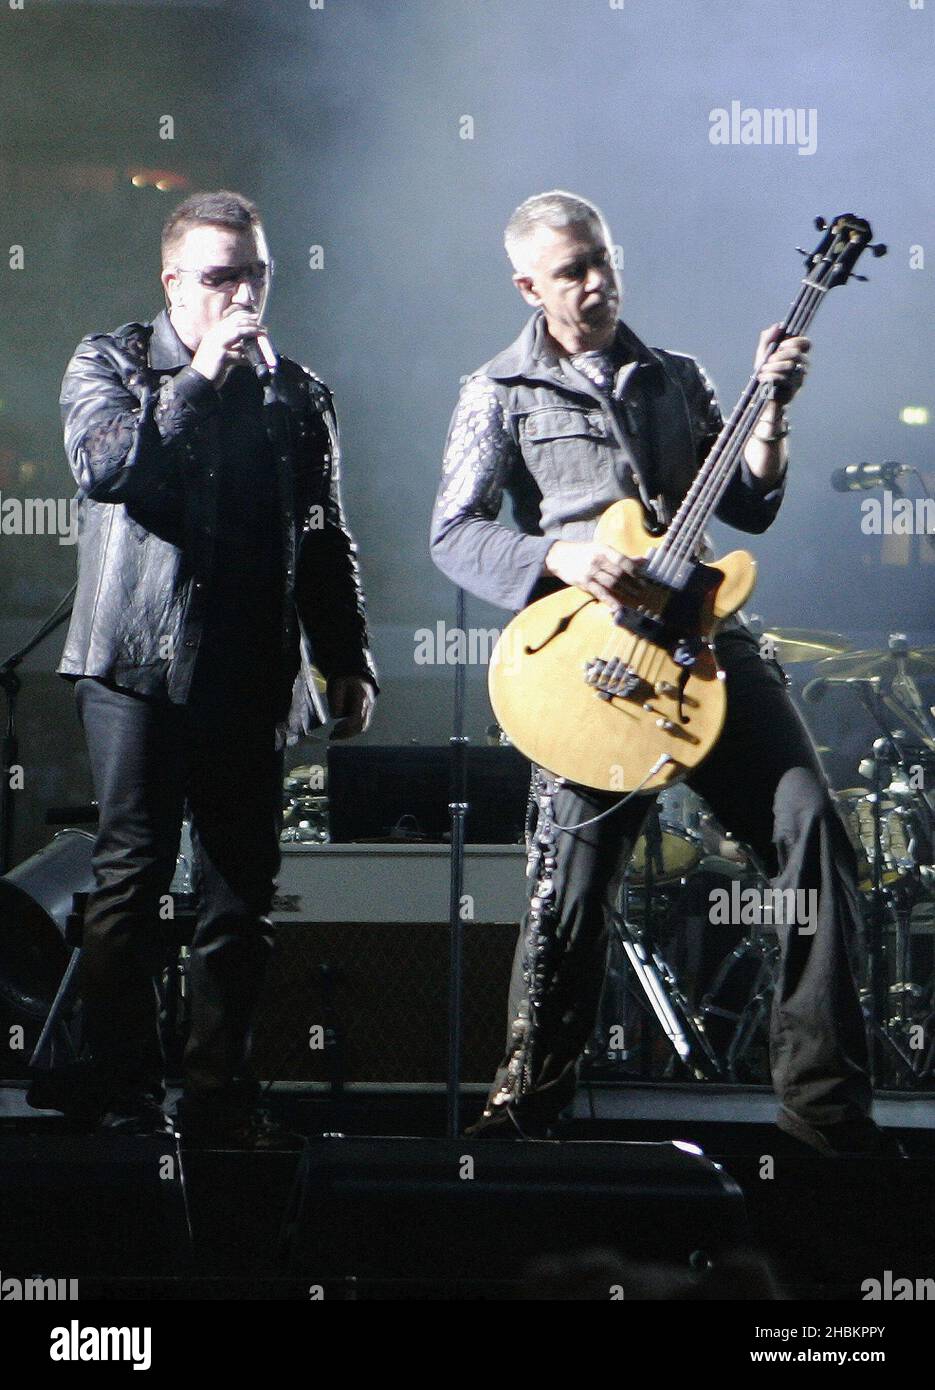 Bono and Adam Clayton perform with U2 at Wembley Stadium in London, UK Stock Photo